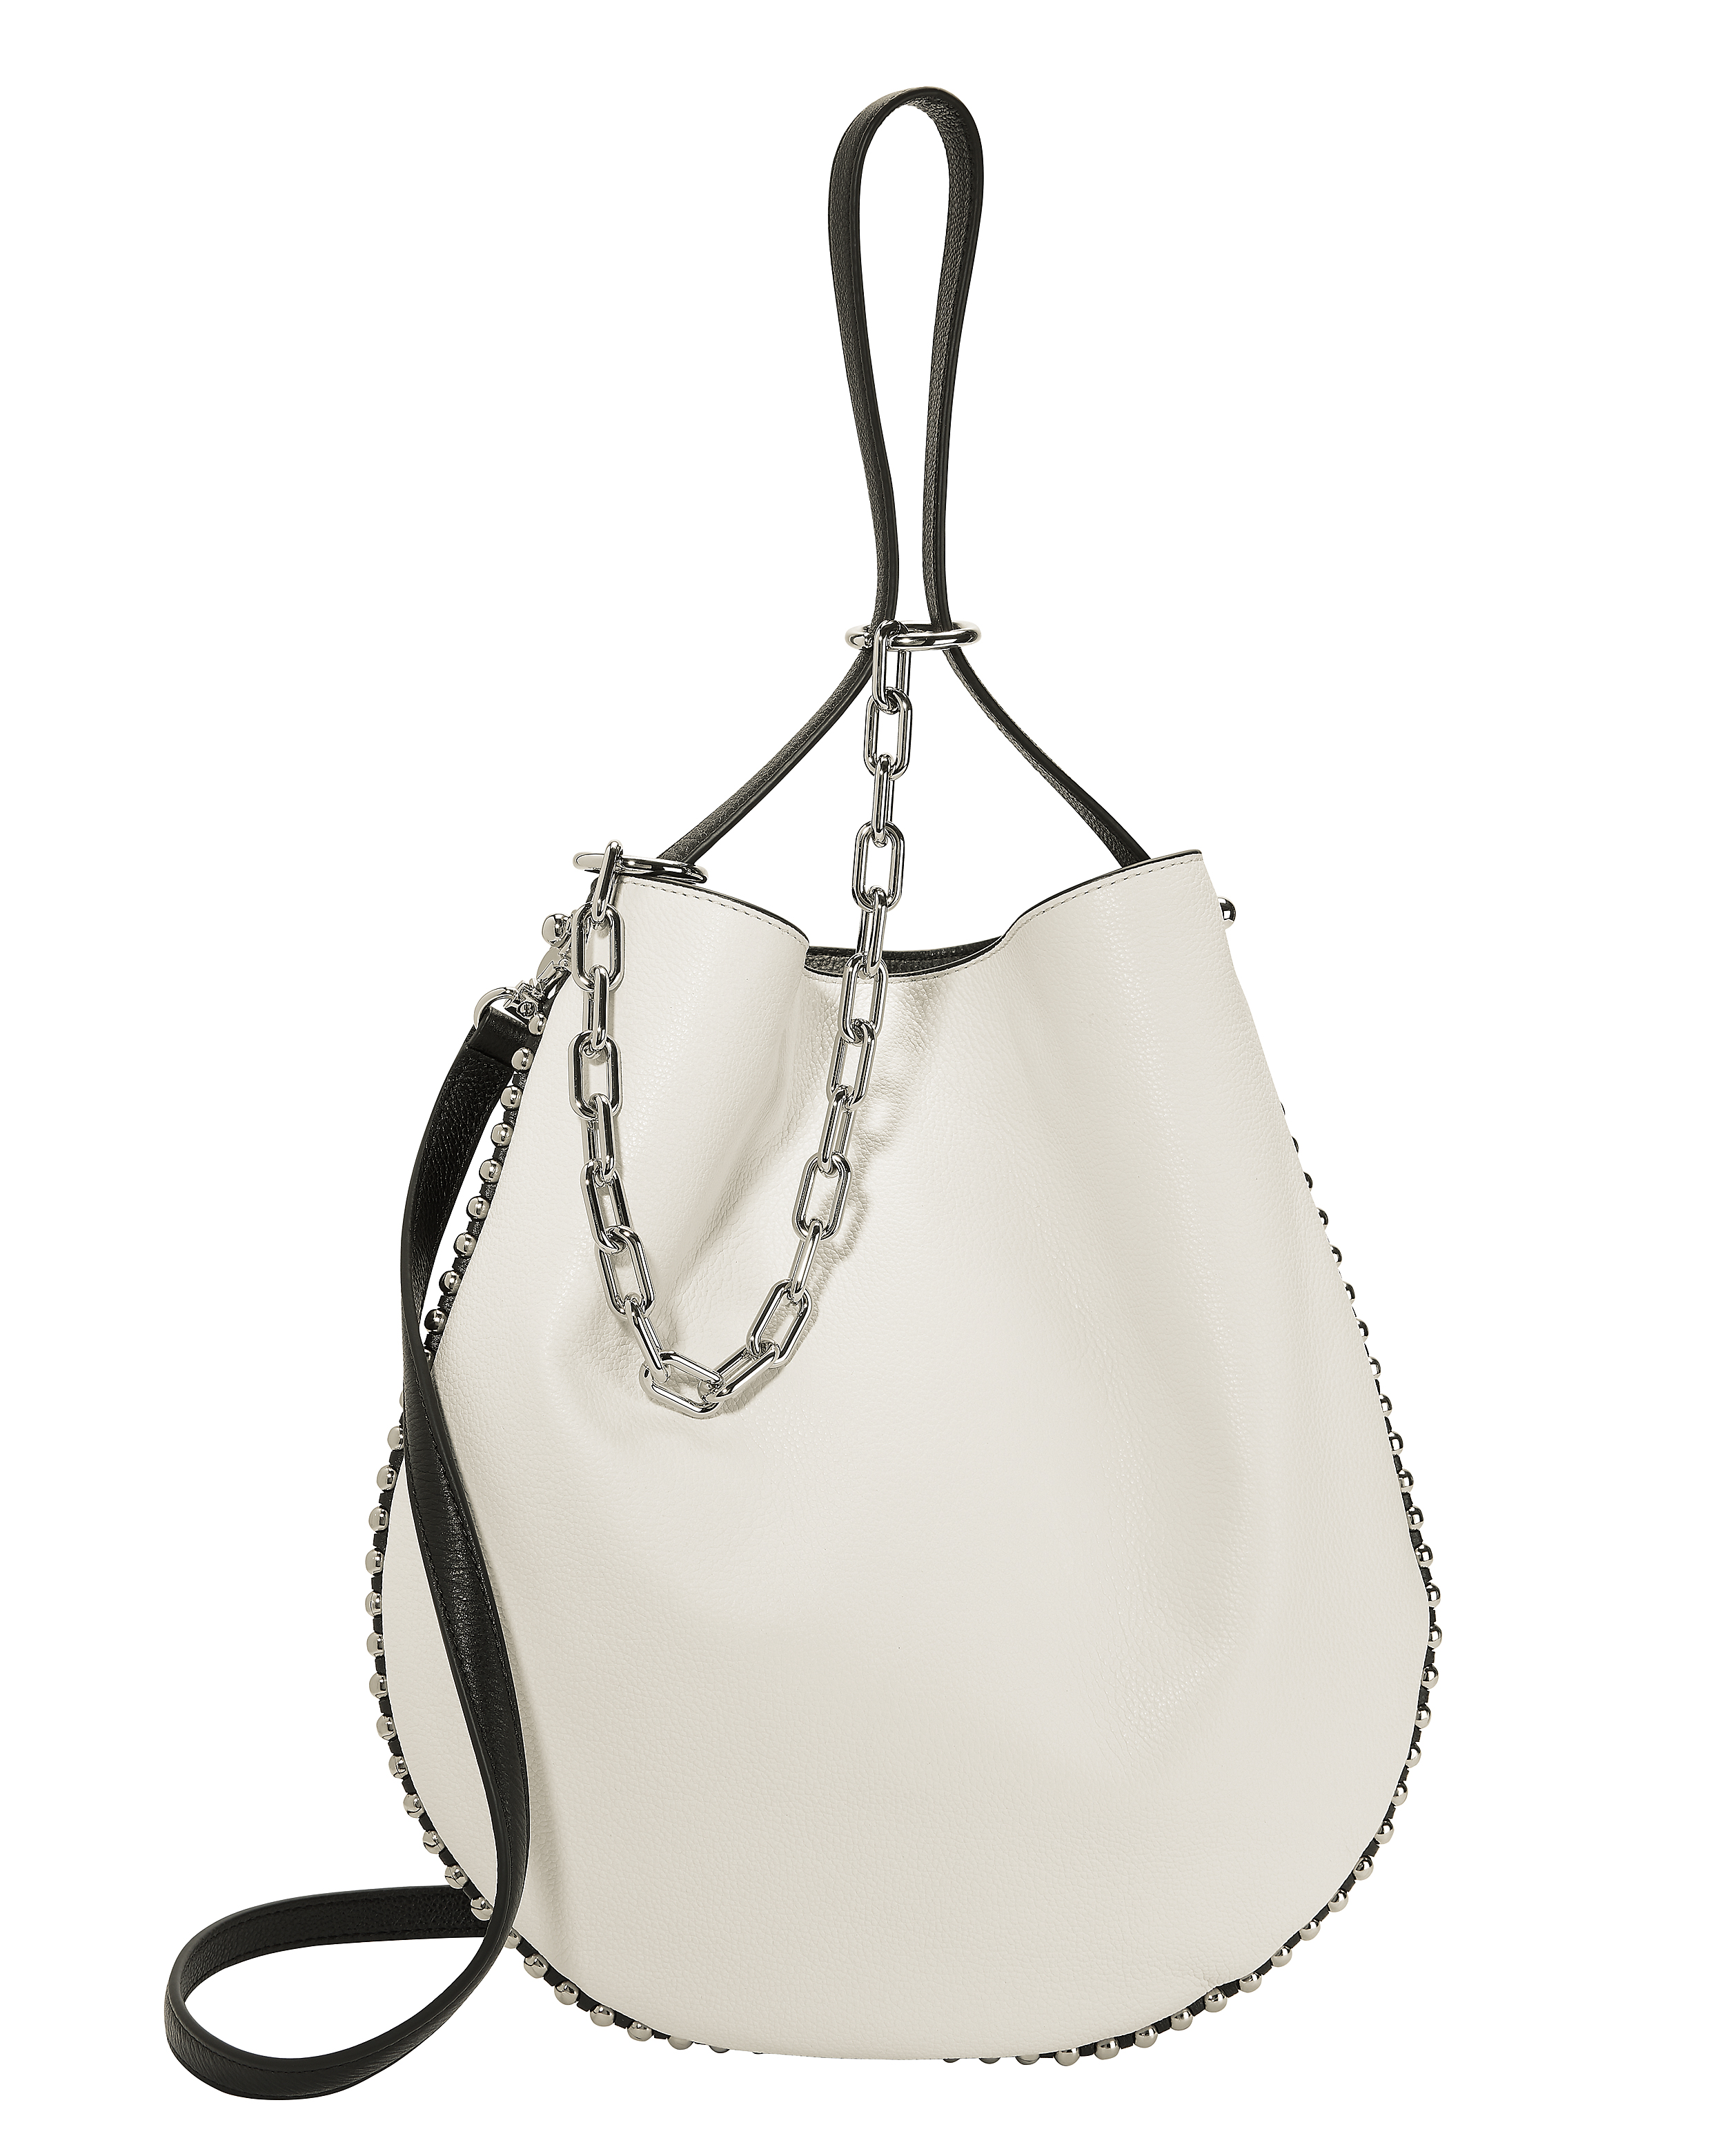 Roxy White Leather Hobo Shoulder Bag